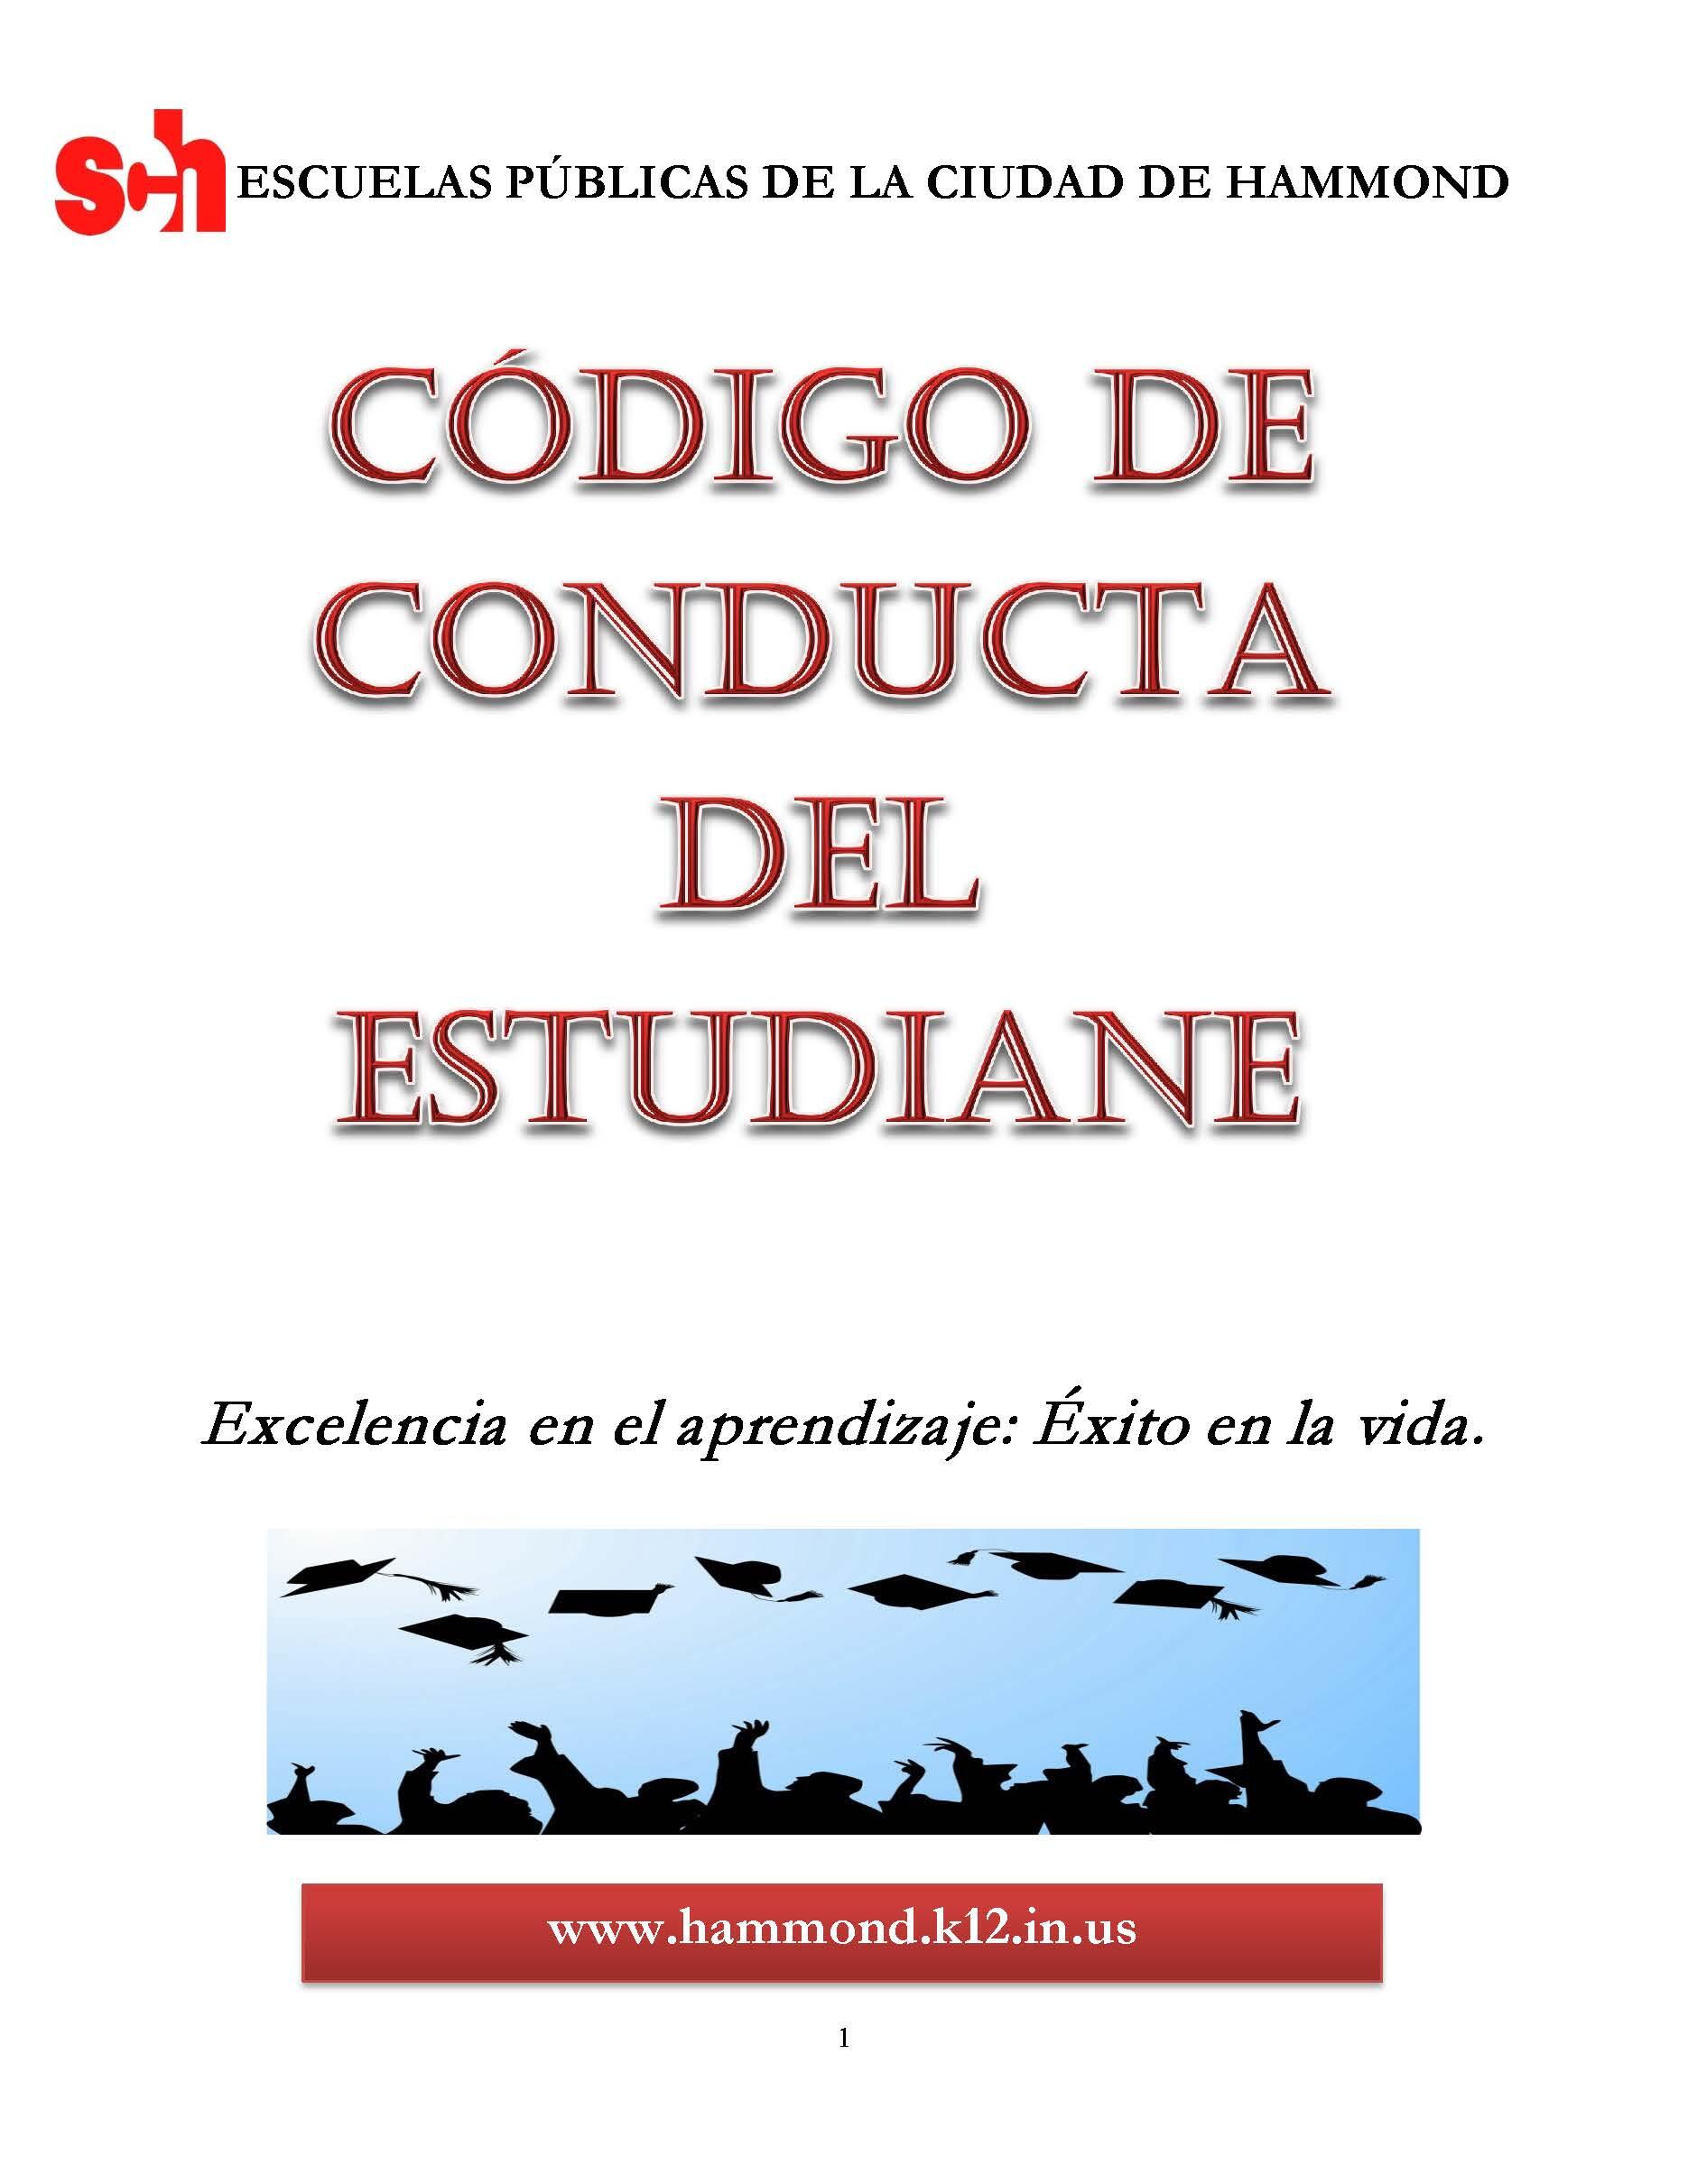 Student Code of Conduct 2019-2020 - Spanish